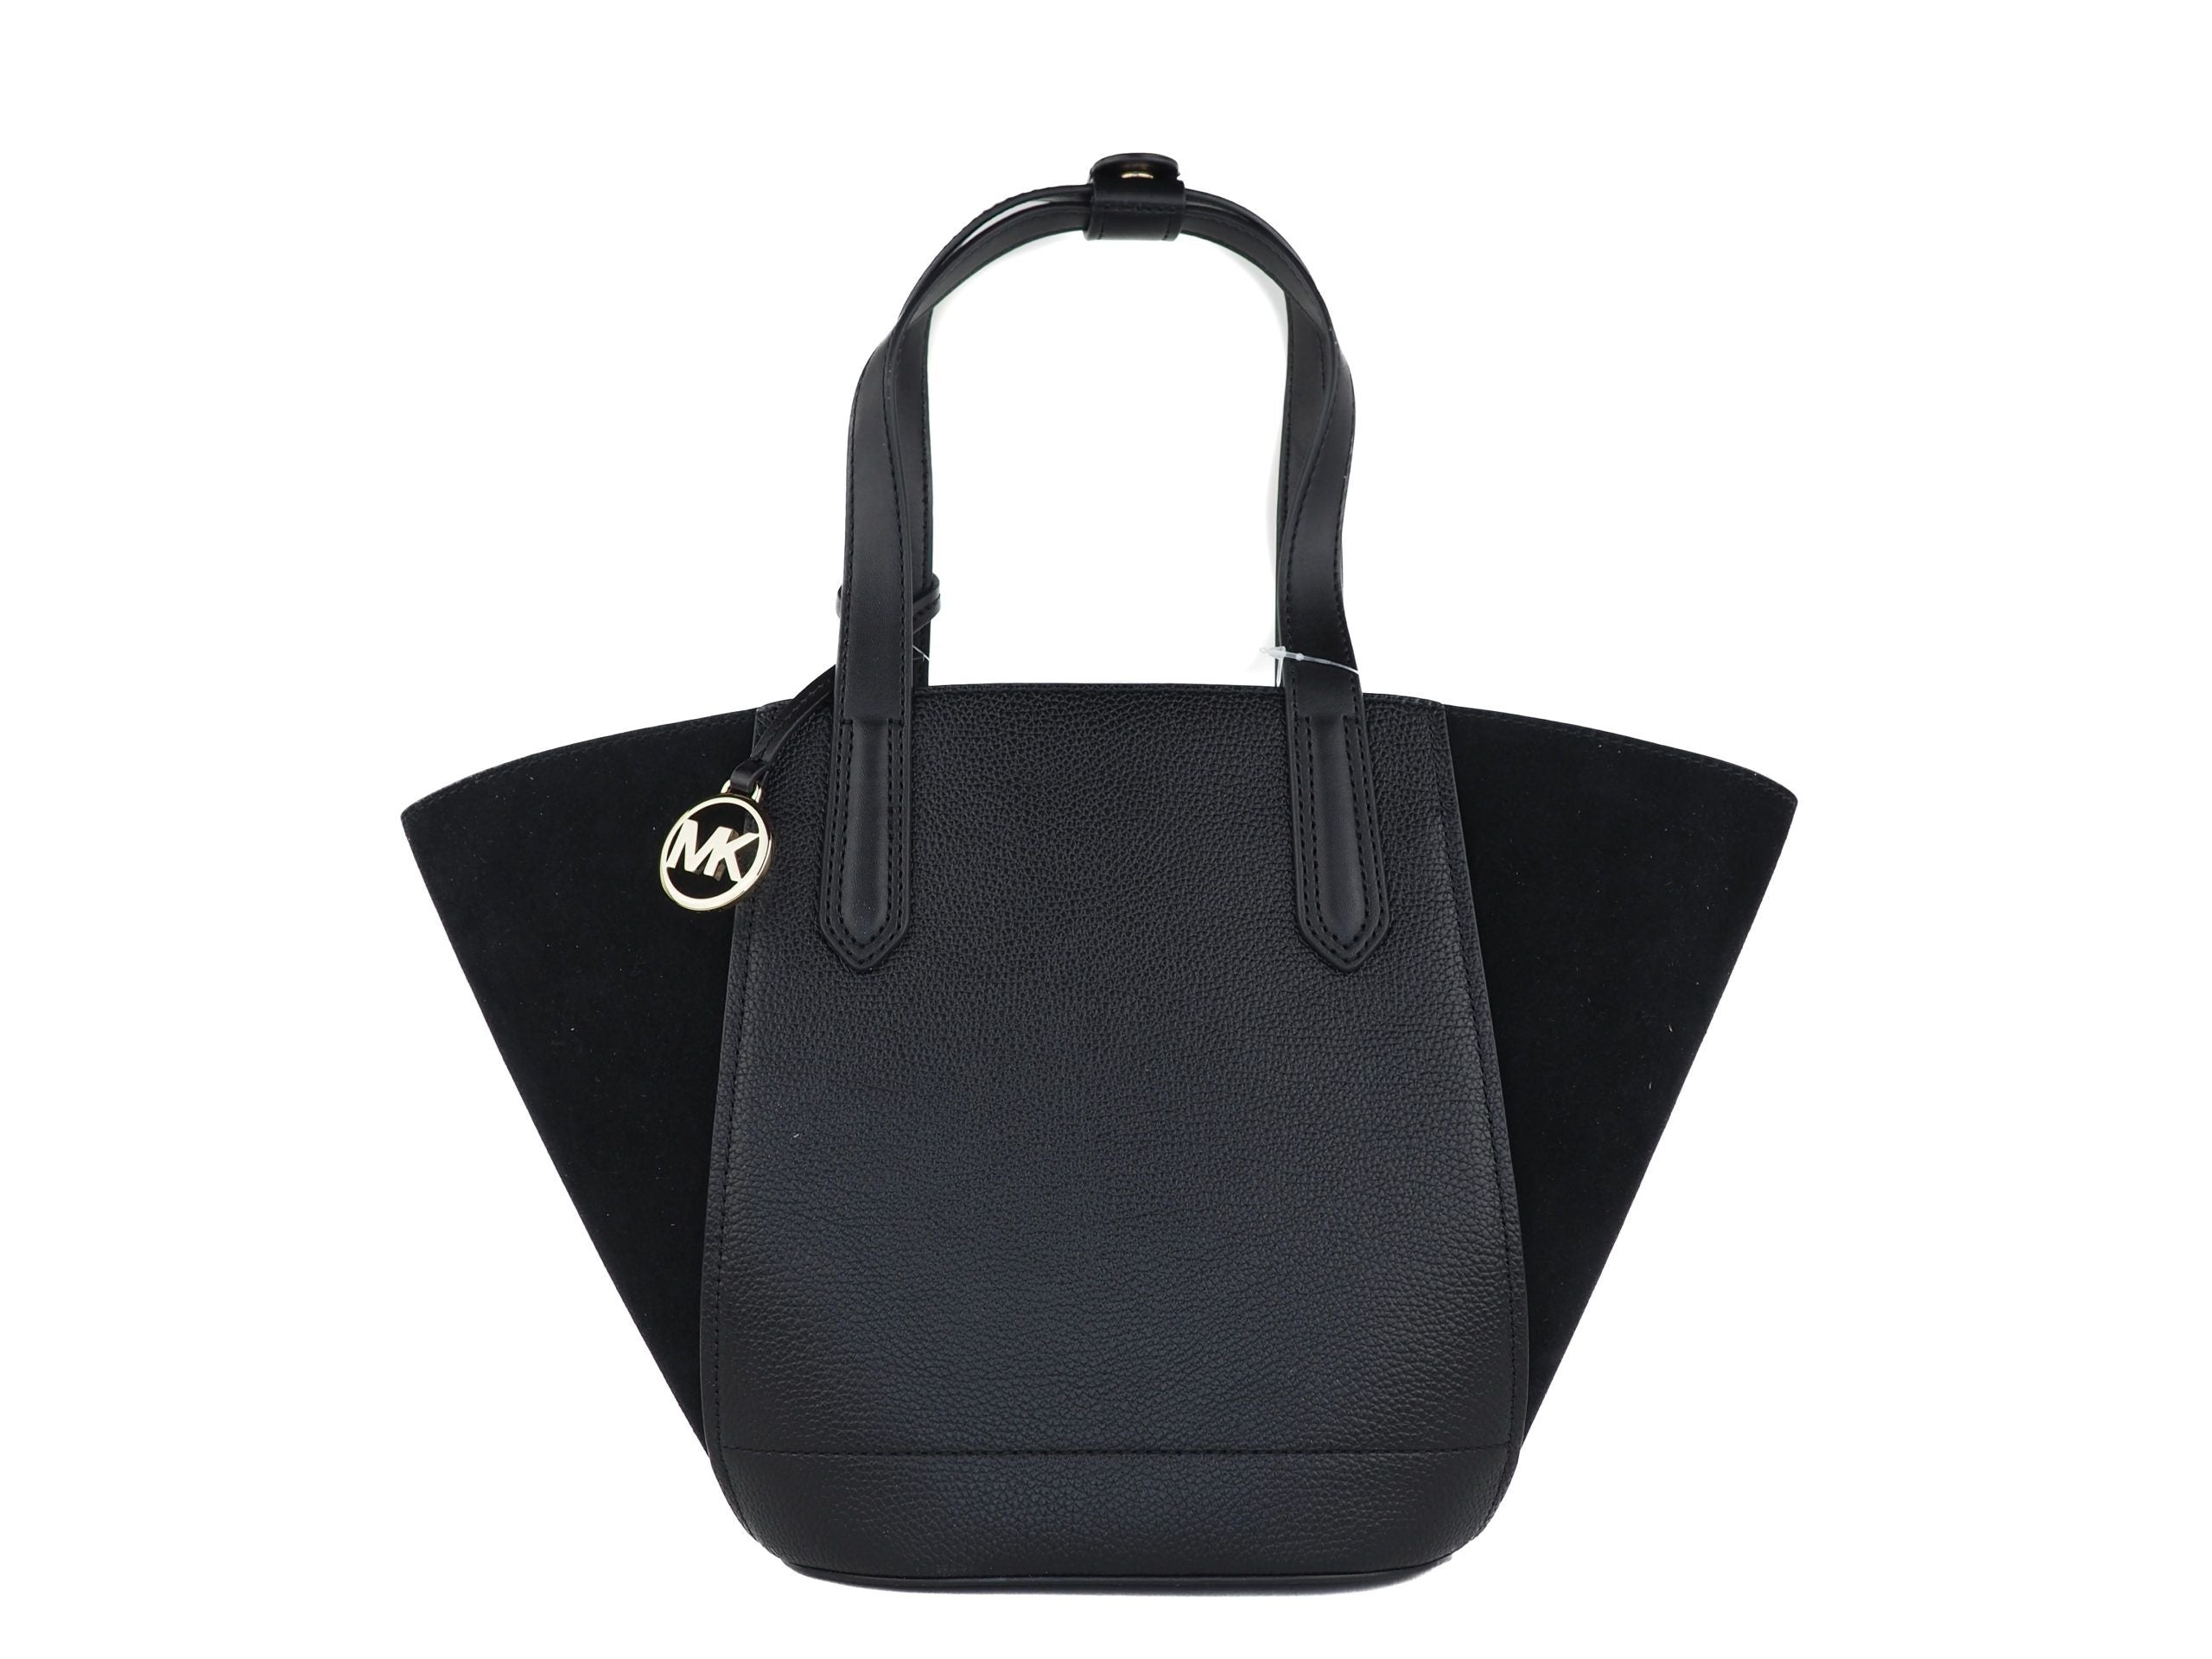 Portia Small Pebbled Leather Suede Tote Handbag (Black)